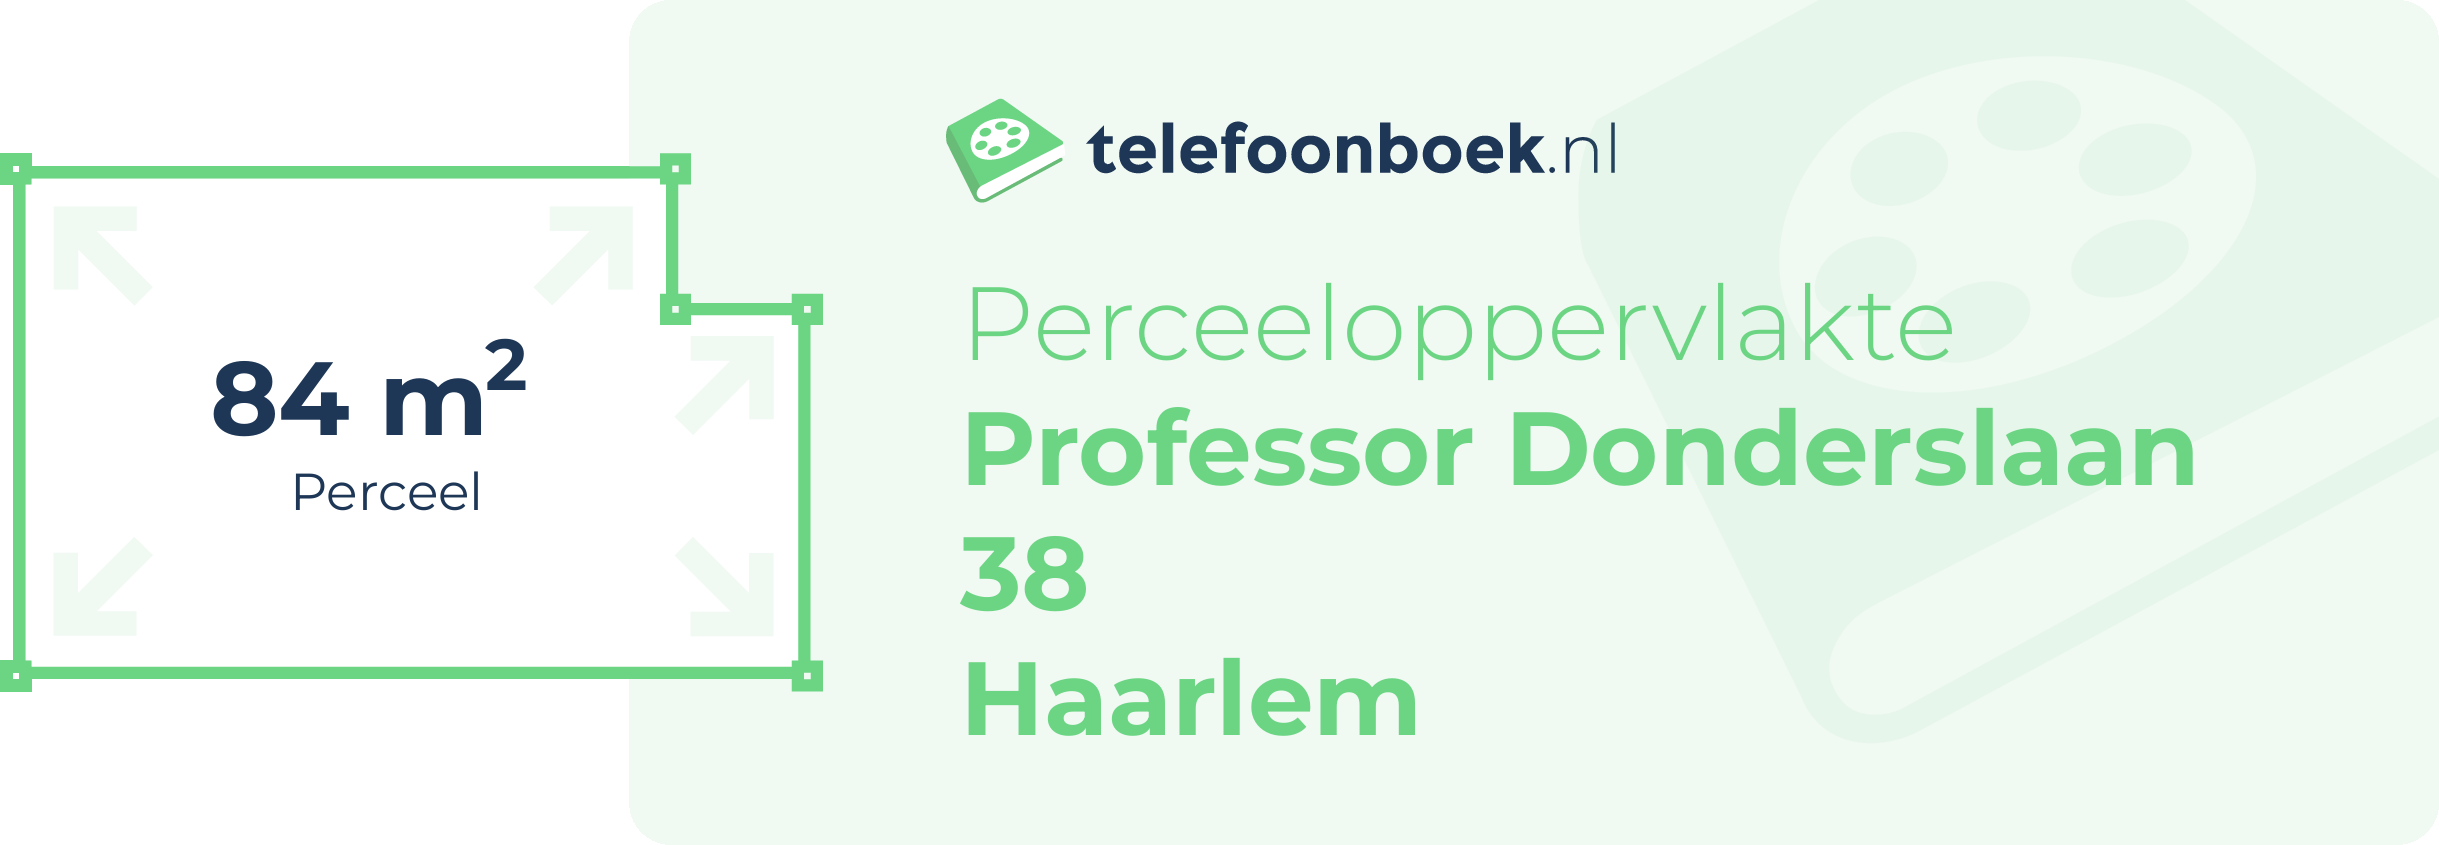 Perceeloppervlakte Professor Donderslaan 38 Haarlem